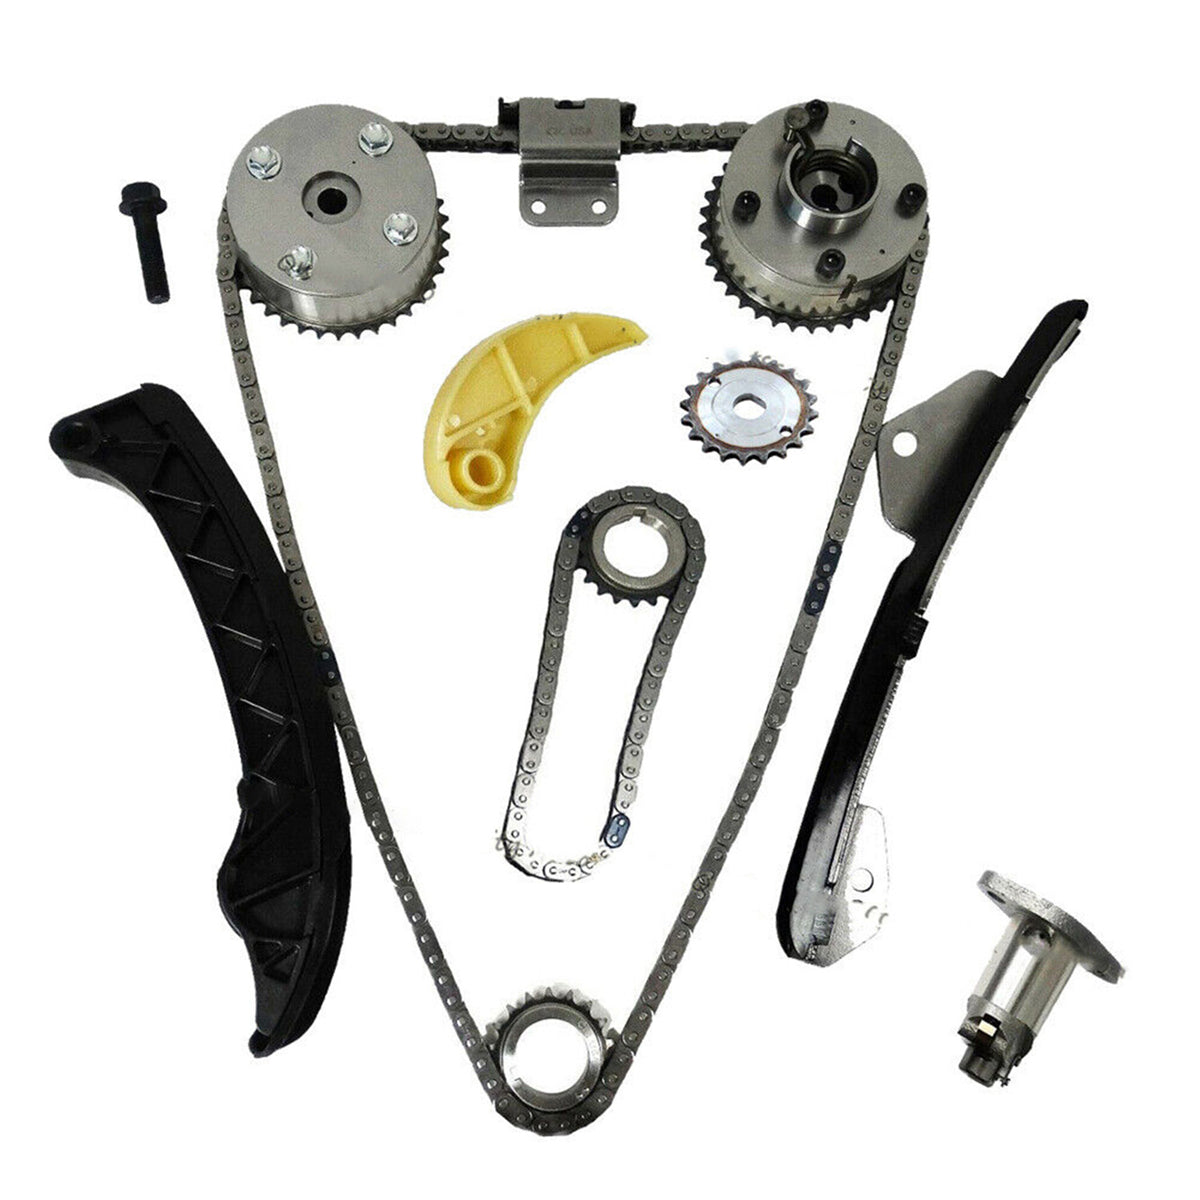 VVT Timing Chain Kit 13506-37010, VVT Timing Chain Kit for 2009-2015 Toyota Corolla Matrix Prius, Car VVT Timing Chain Kit